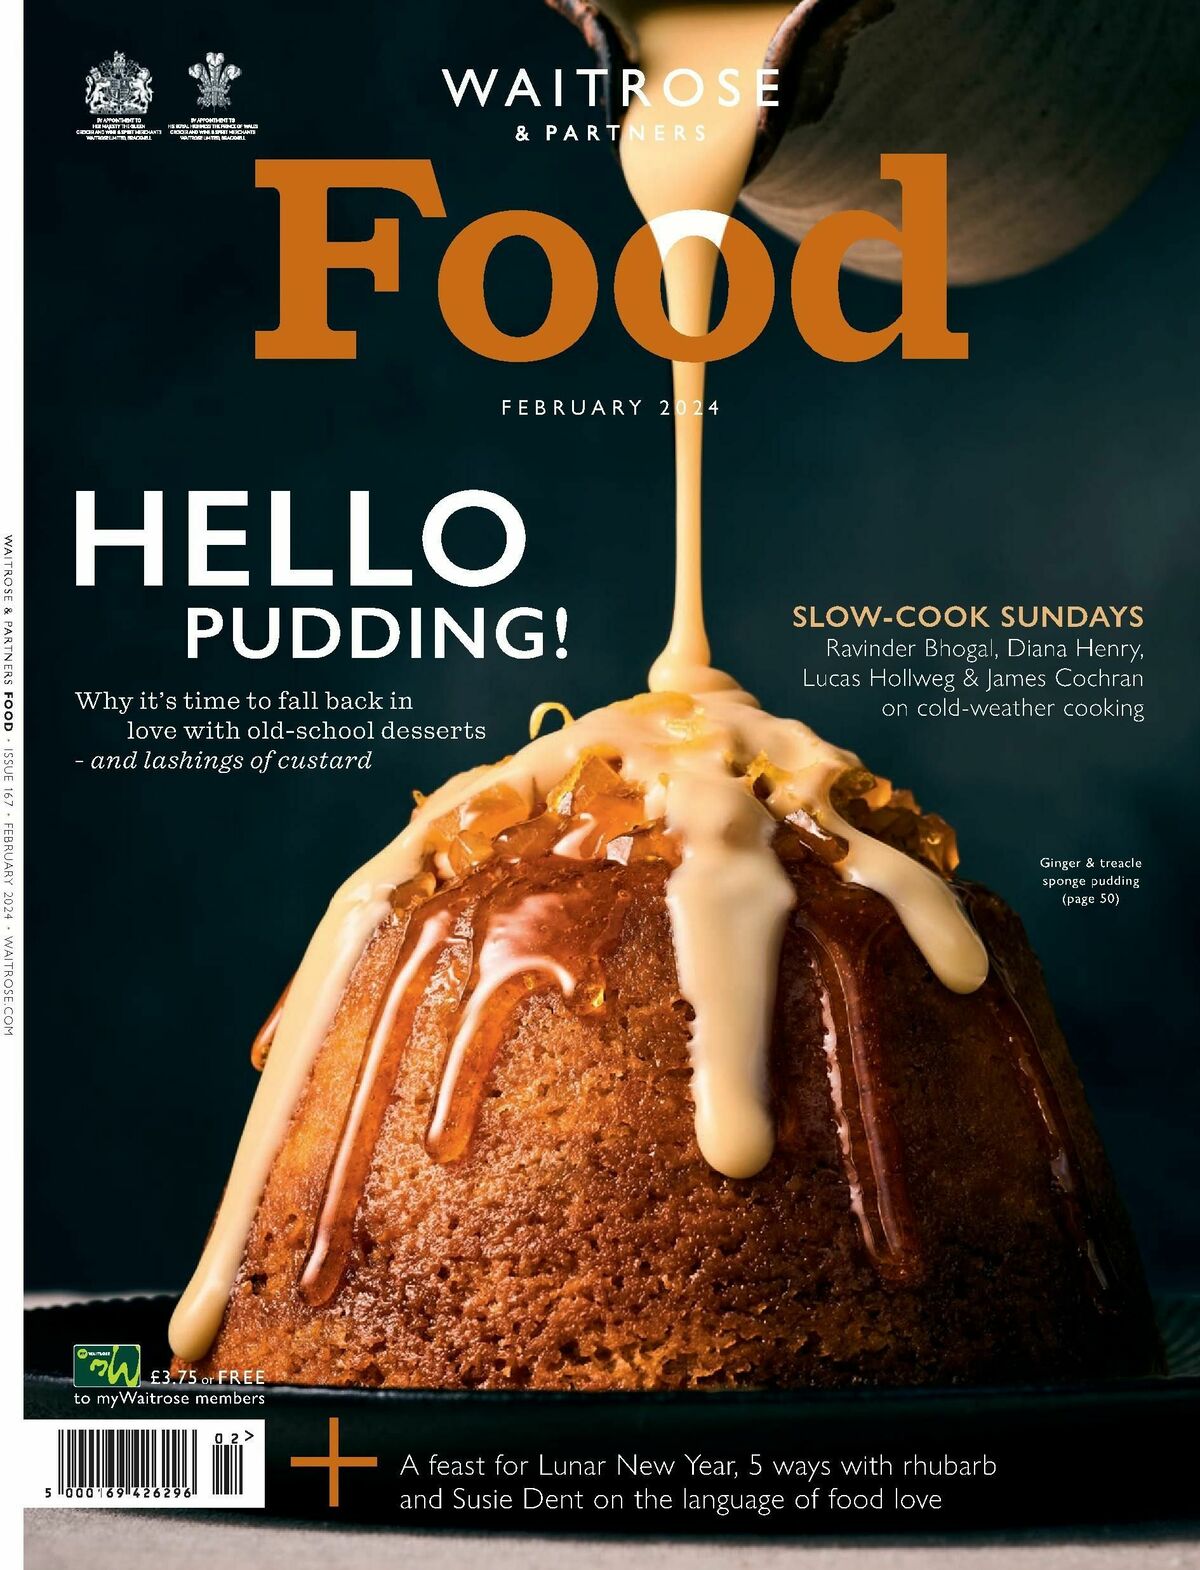 Waitrose Food Magazine February Offers from 1 February